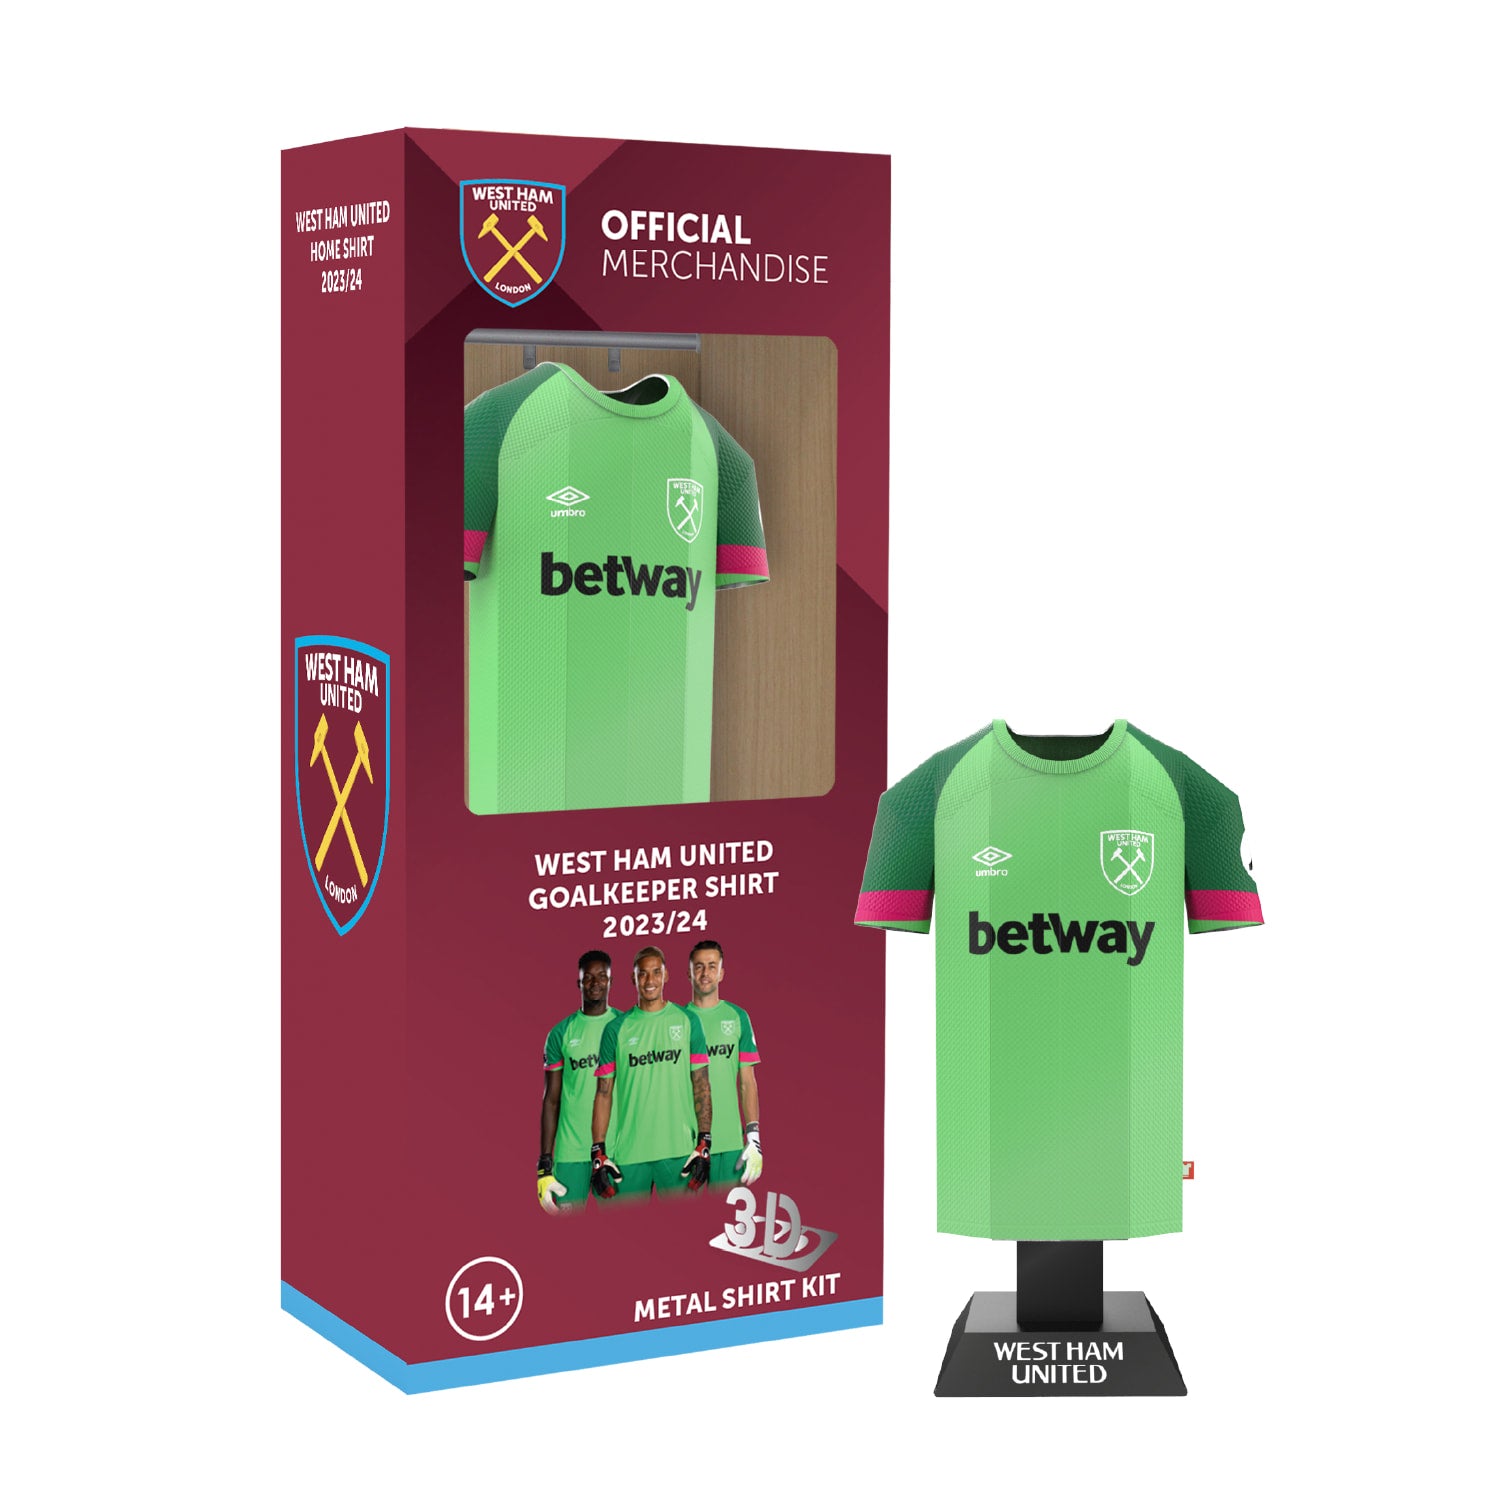 West ham goalkeeper shirt locker pack with packaging